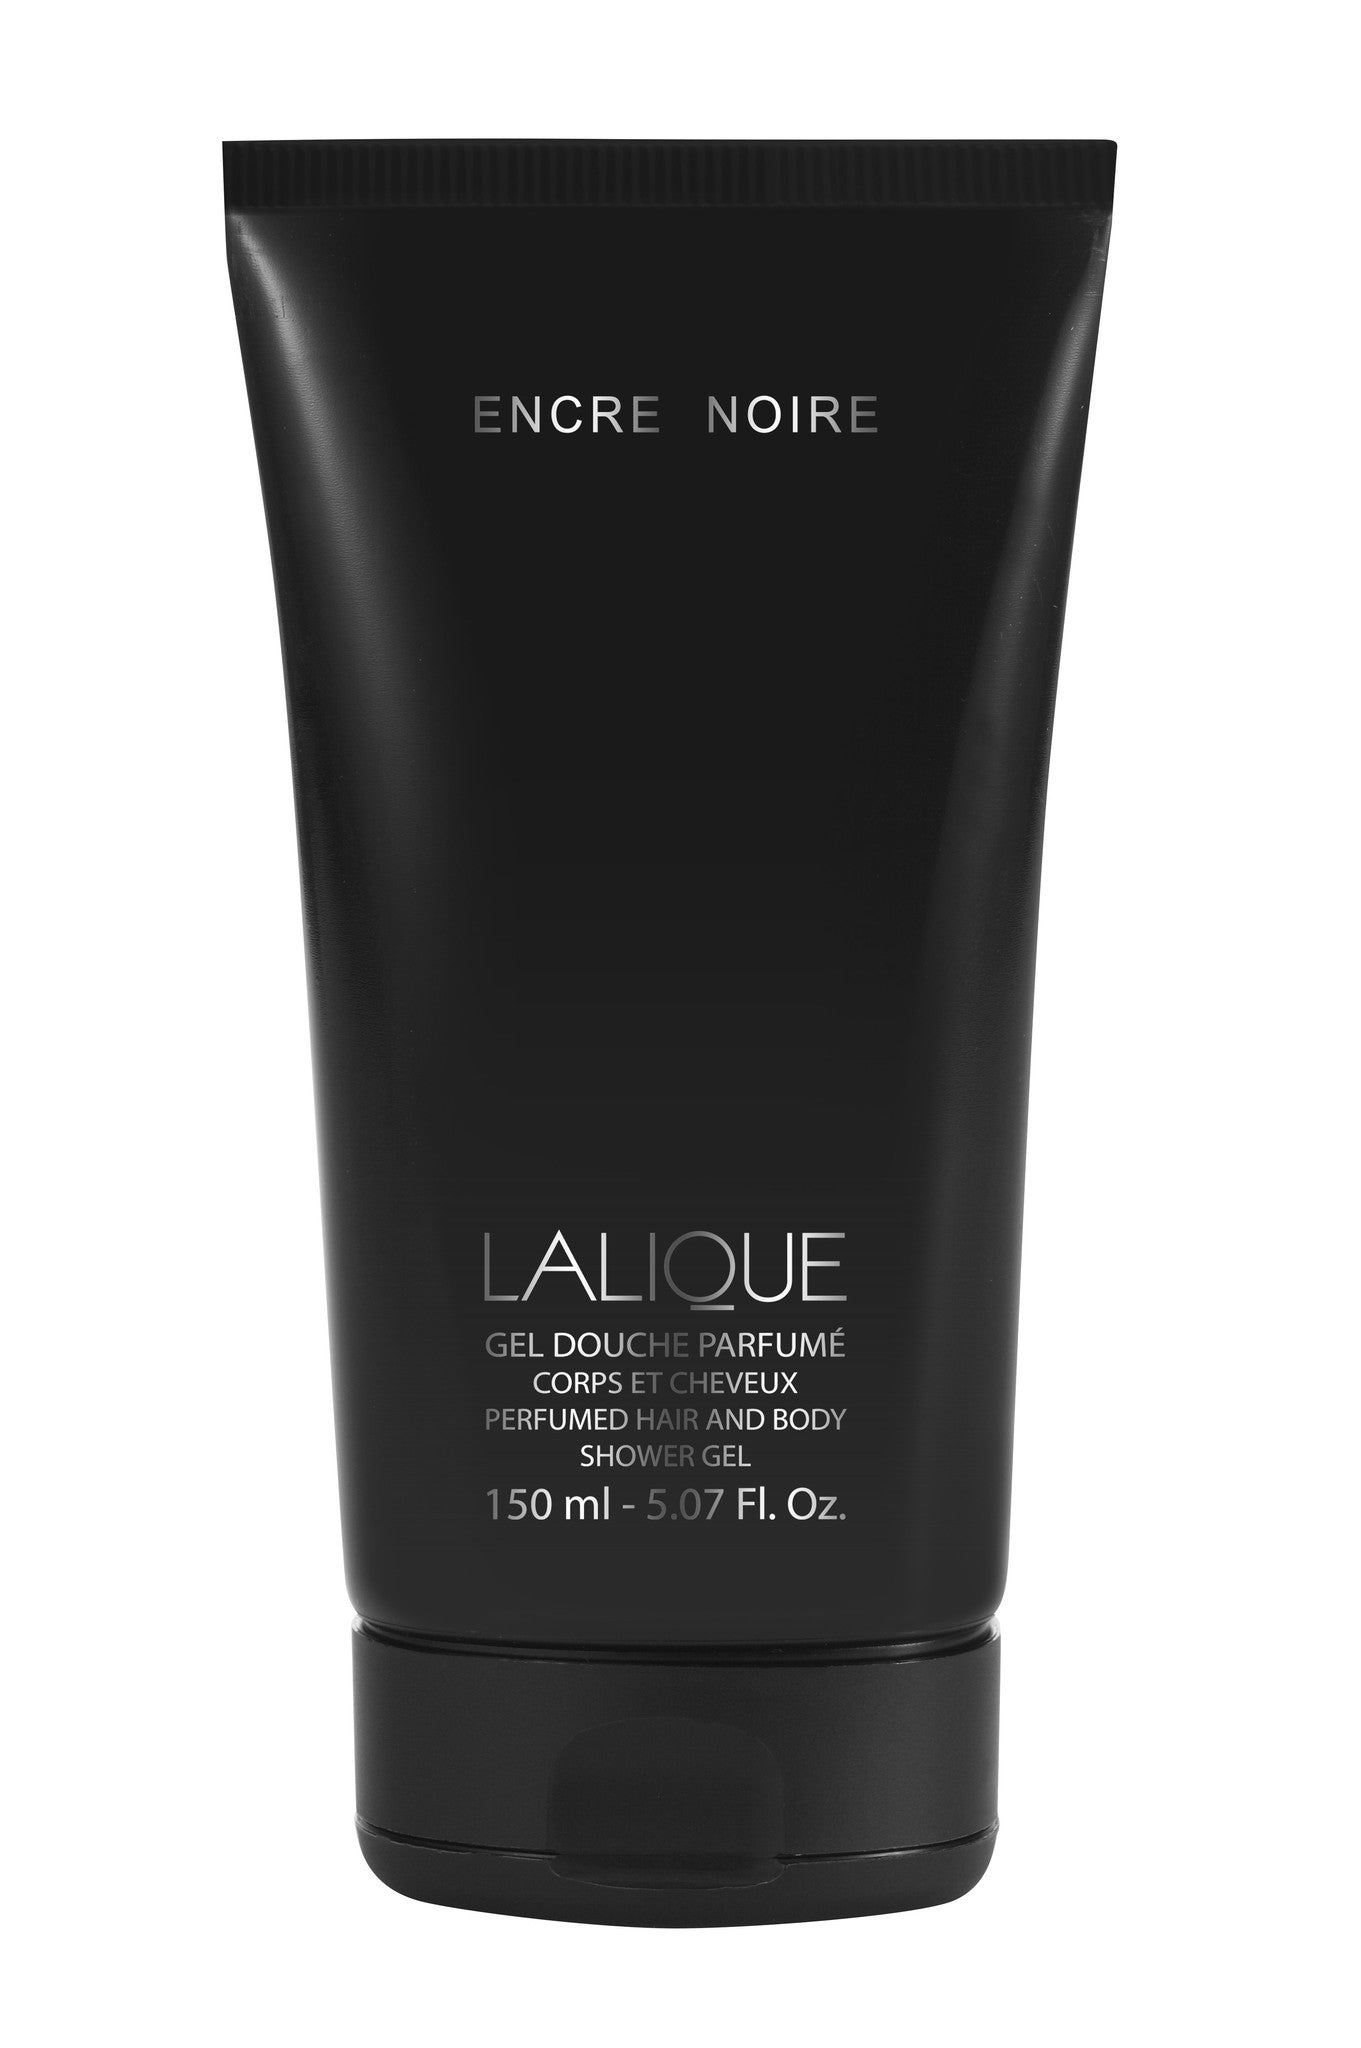 Encre Noire 5.07 oz Shower Gel